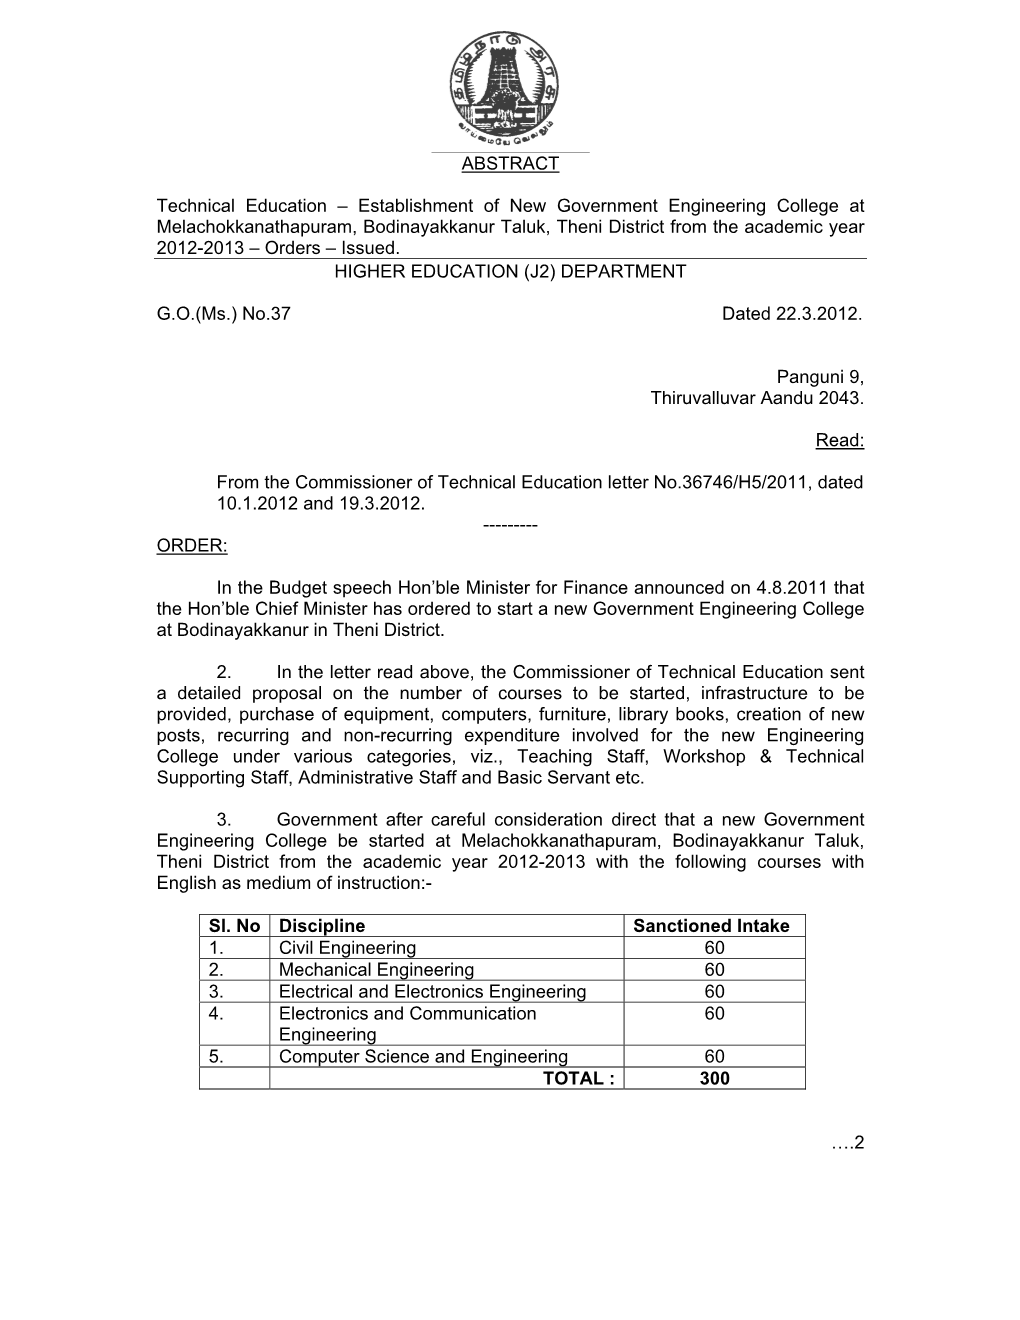 Establishment of New Government Engineering College at Melachokkanathapuram, Bodinayakkanur Taluk, Theni District from the Academic Year 2012-2013 – Orders – Issued